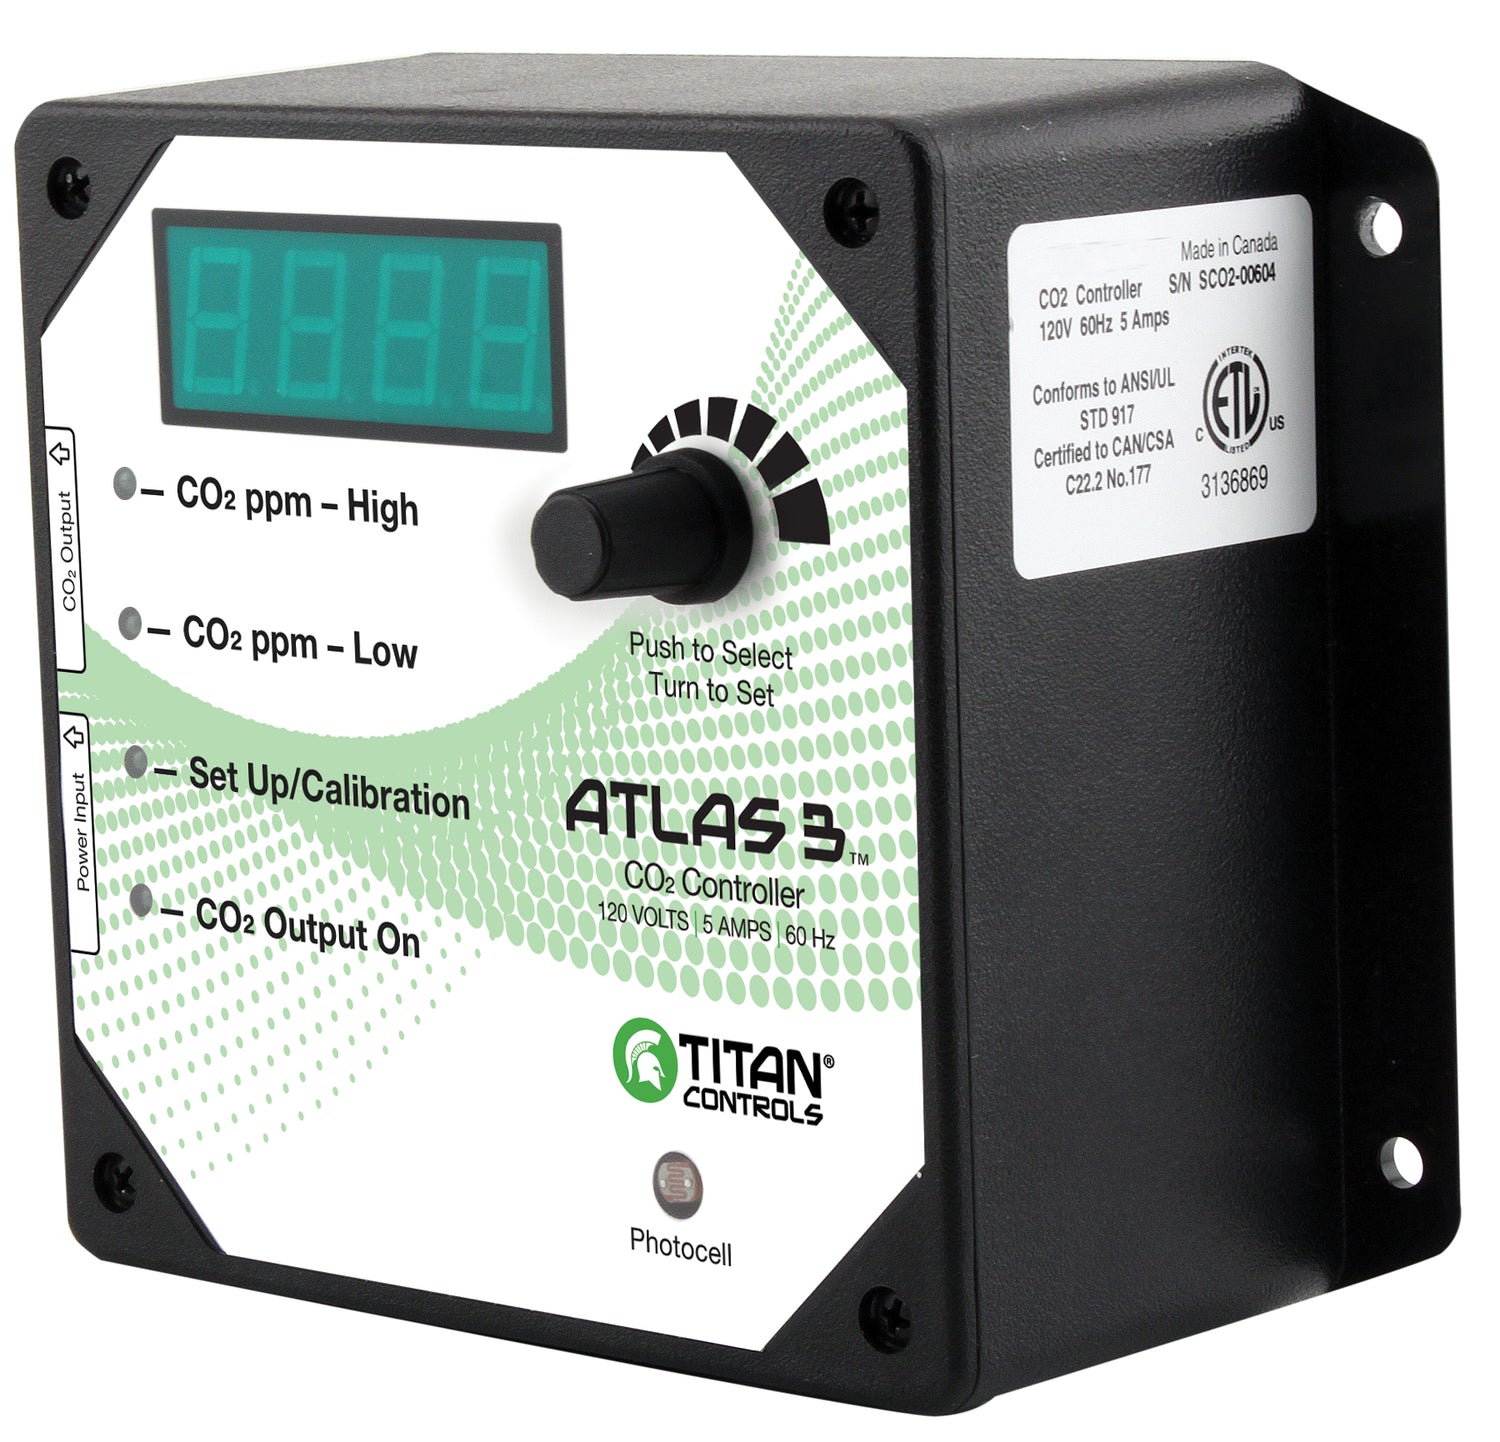 Titan Controls® Atlas® 3 - Day/Night CO2 Monitor/Controller